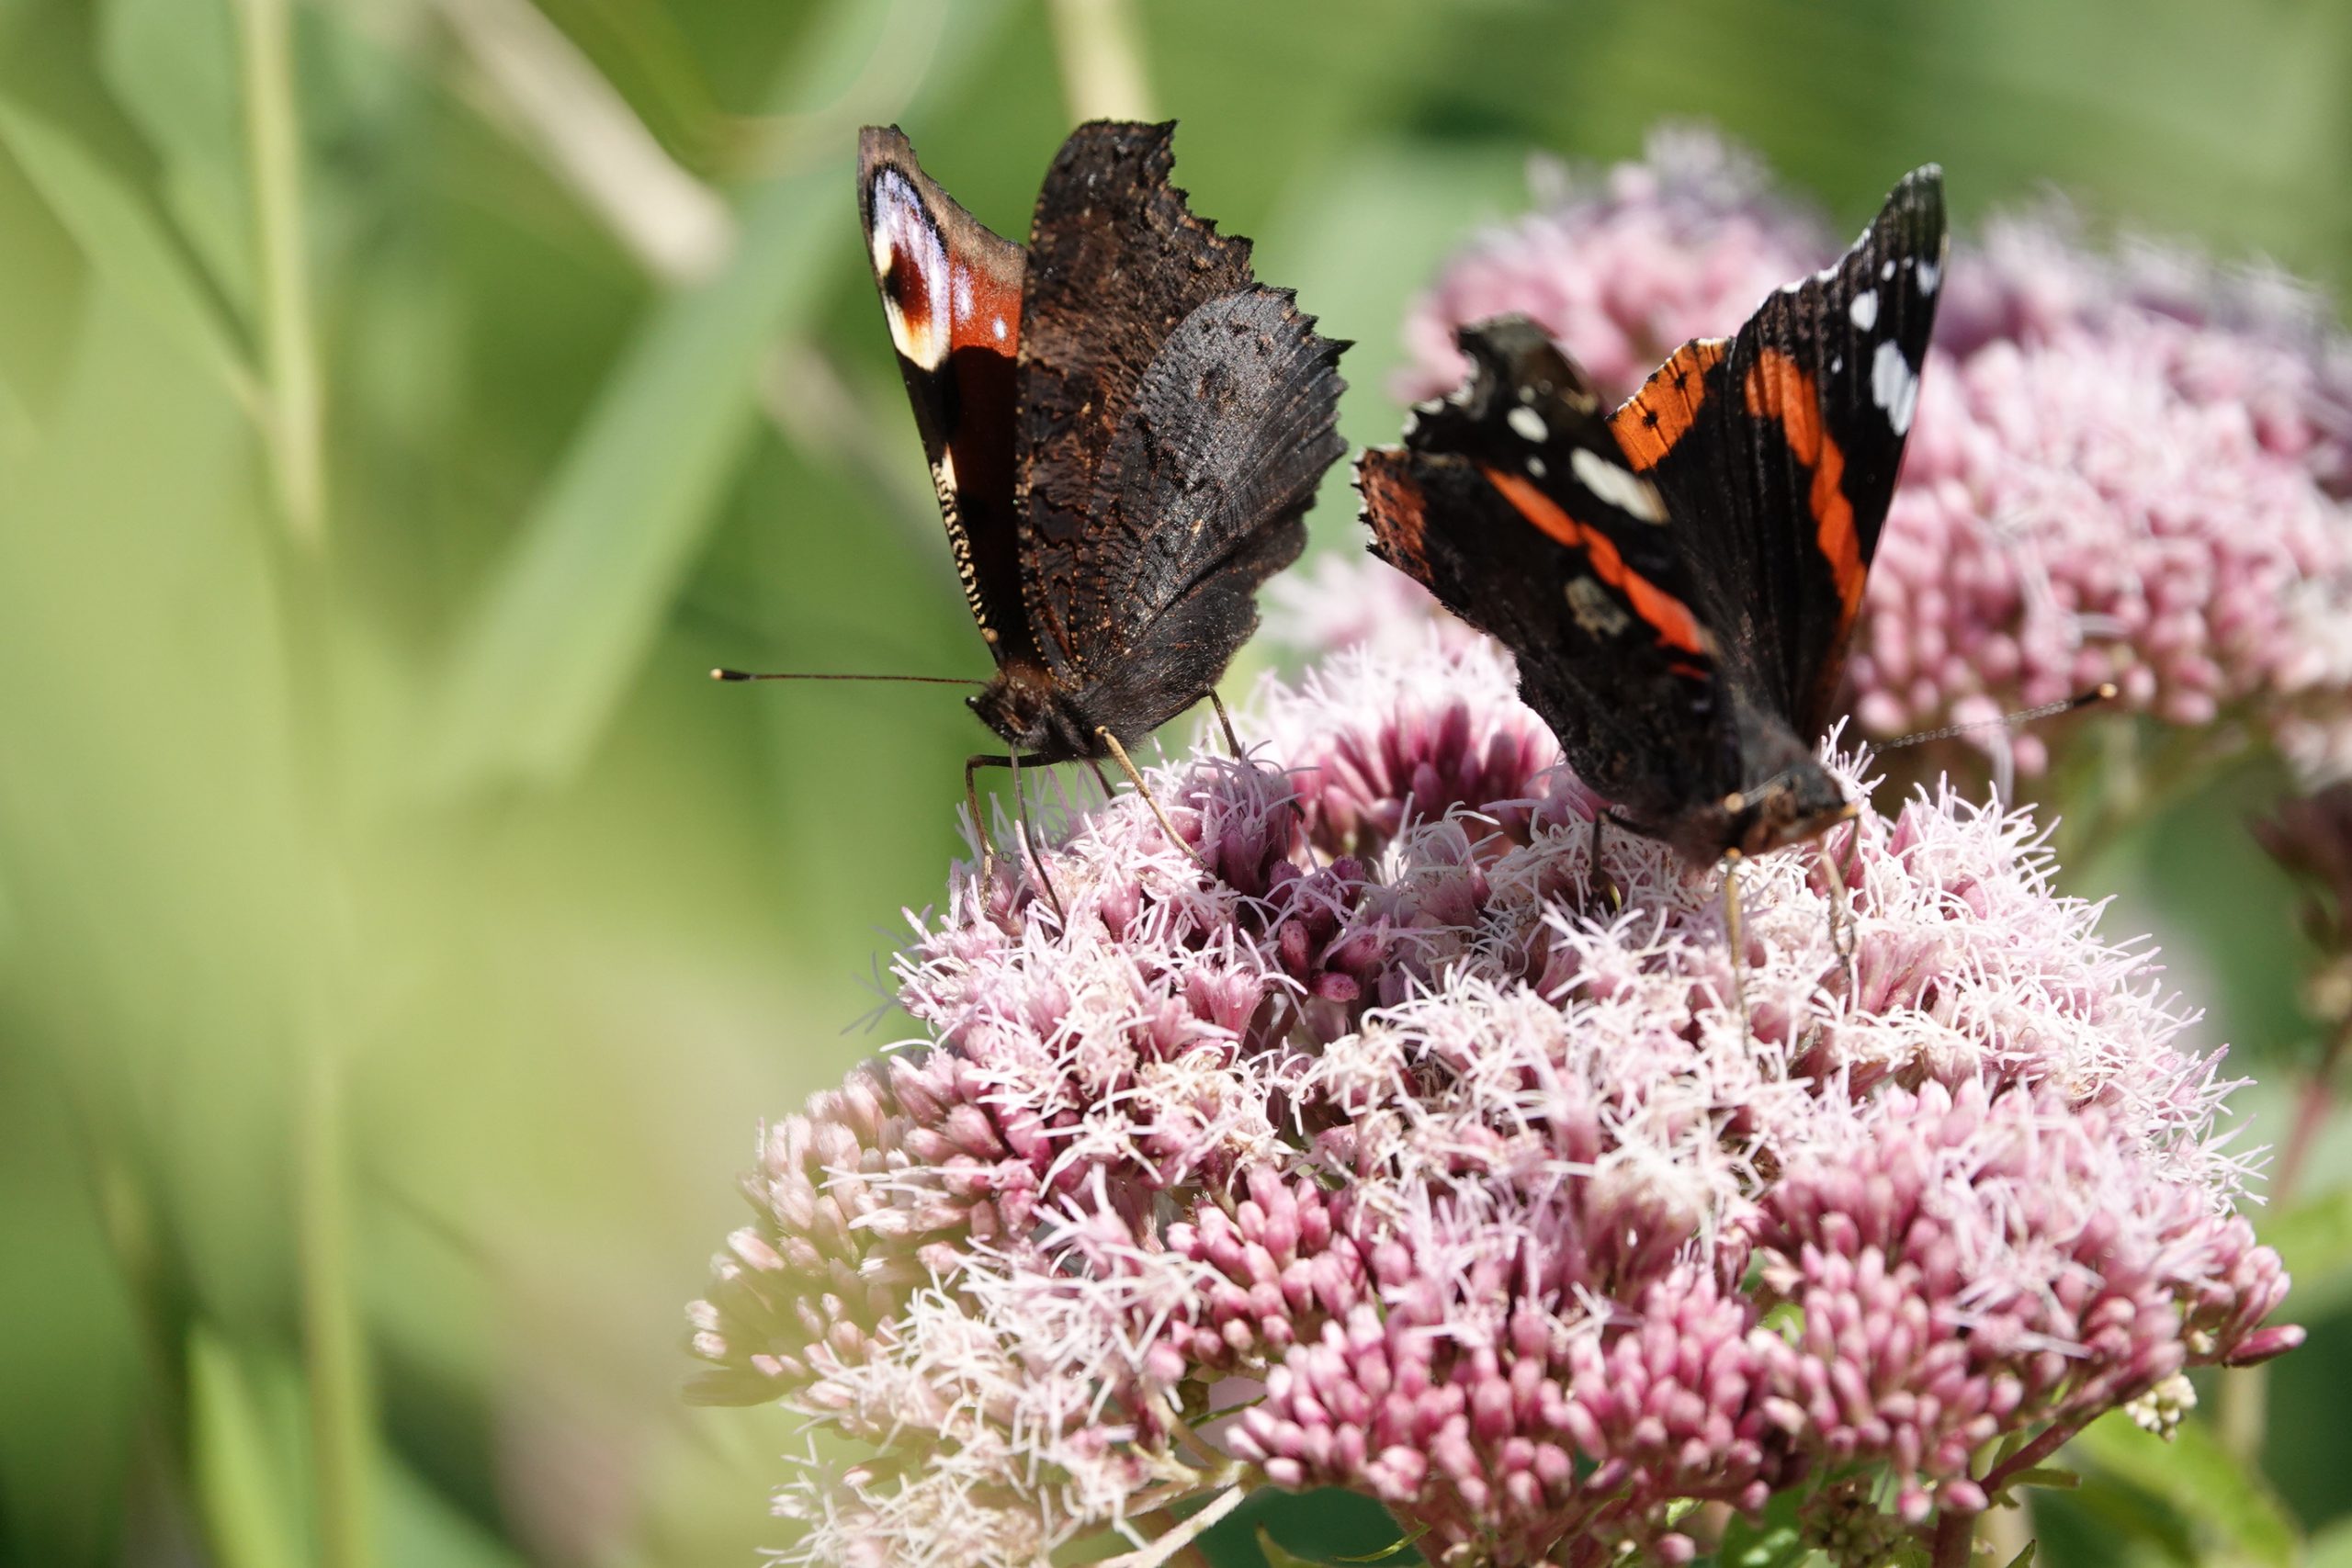 Hundredevis af sommerfugle suger nektar på vilde planter som hjortetrøst i sensommeren. Foto: Uffe Rasmussen